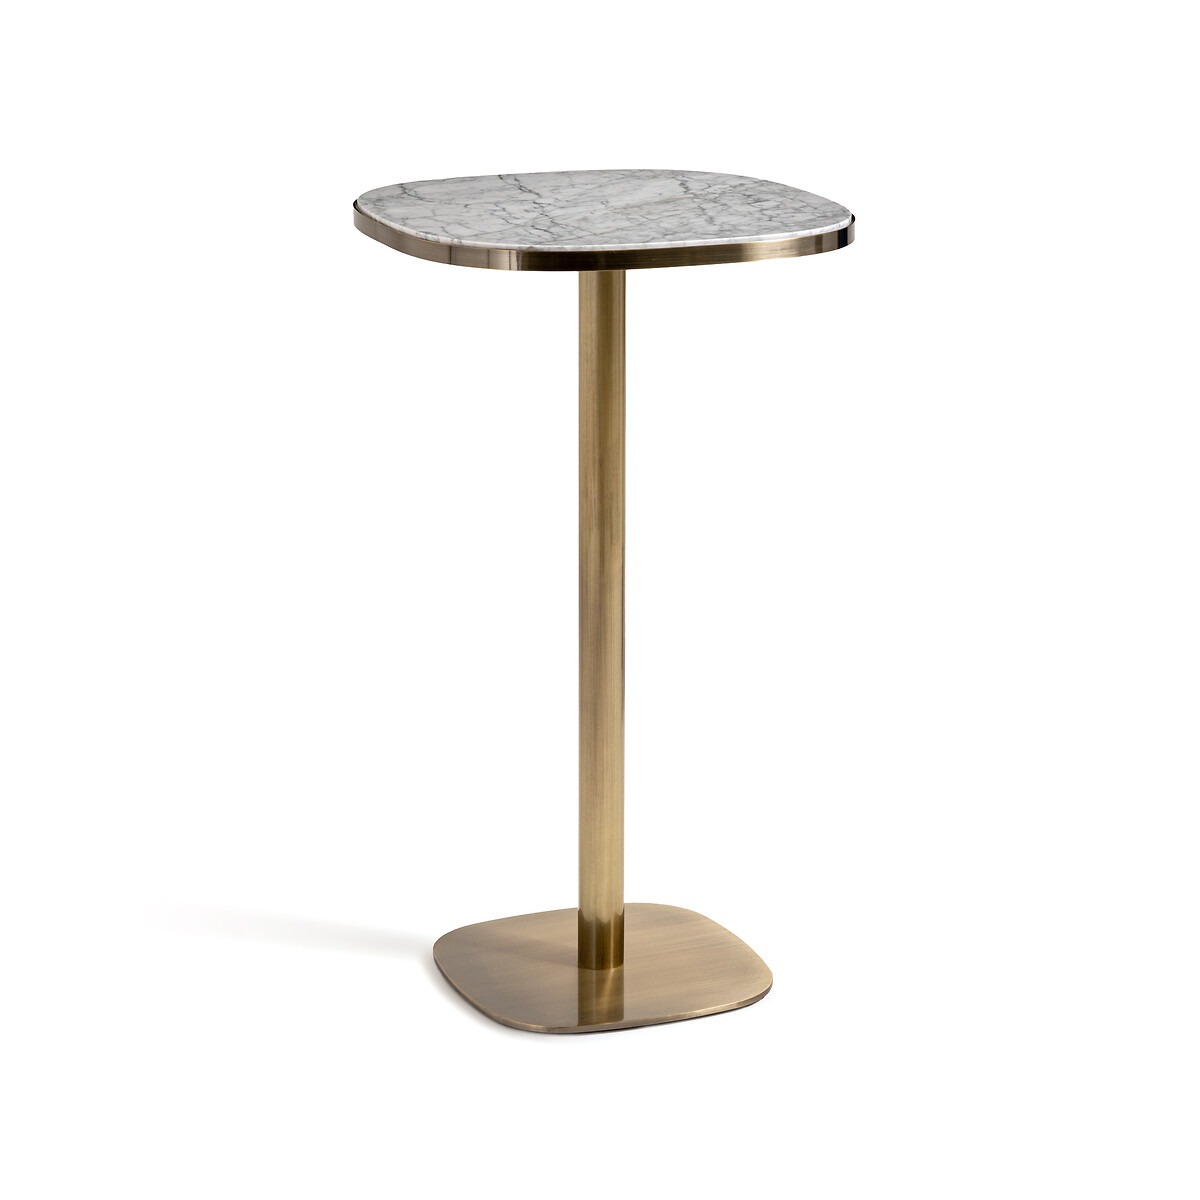 Lixfeld White Marble & Metal High Table